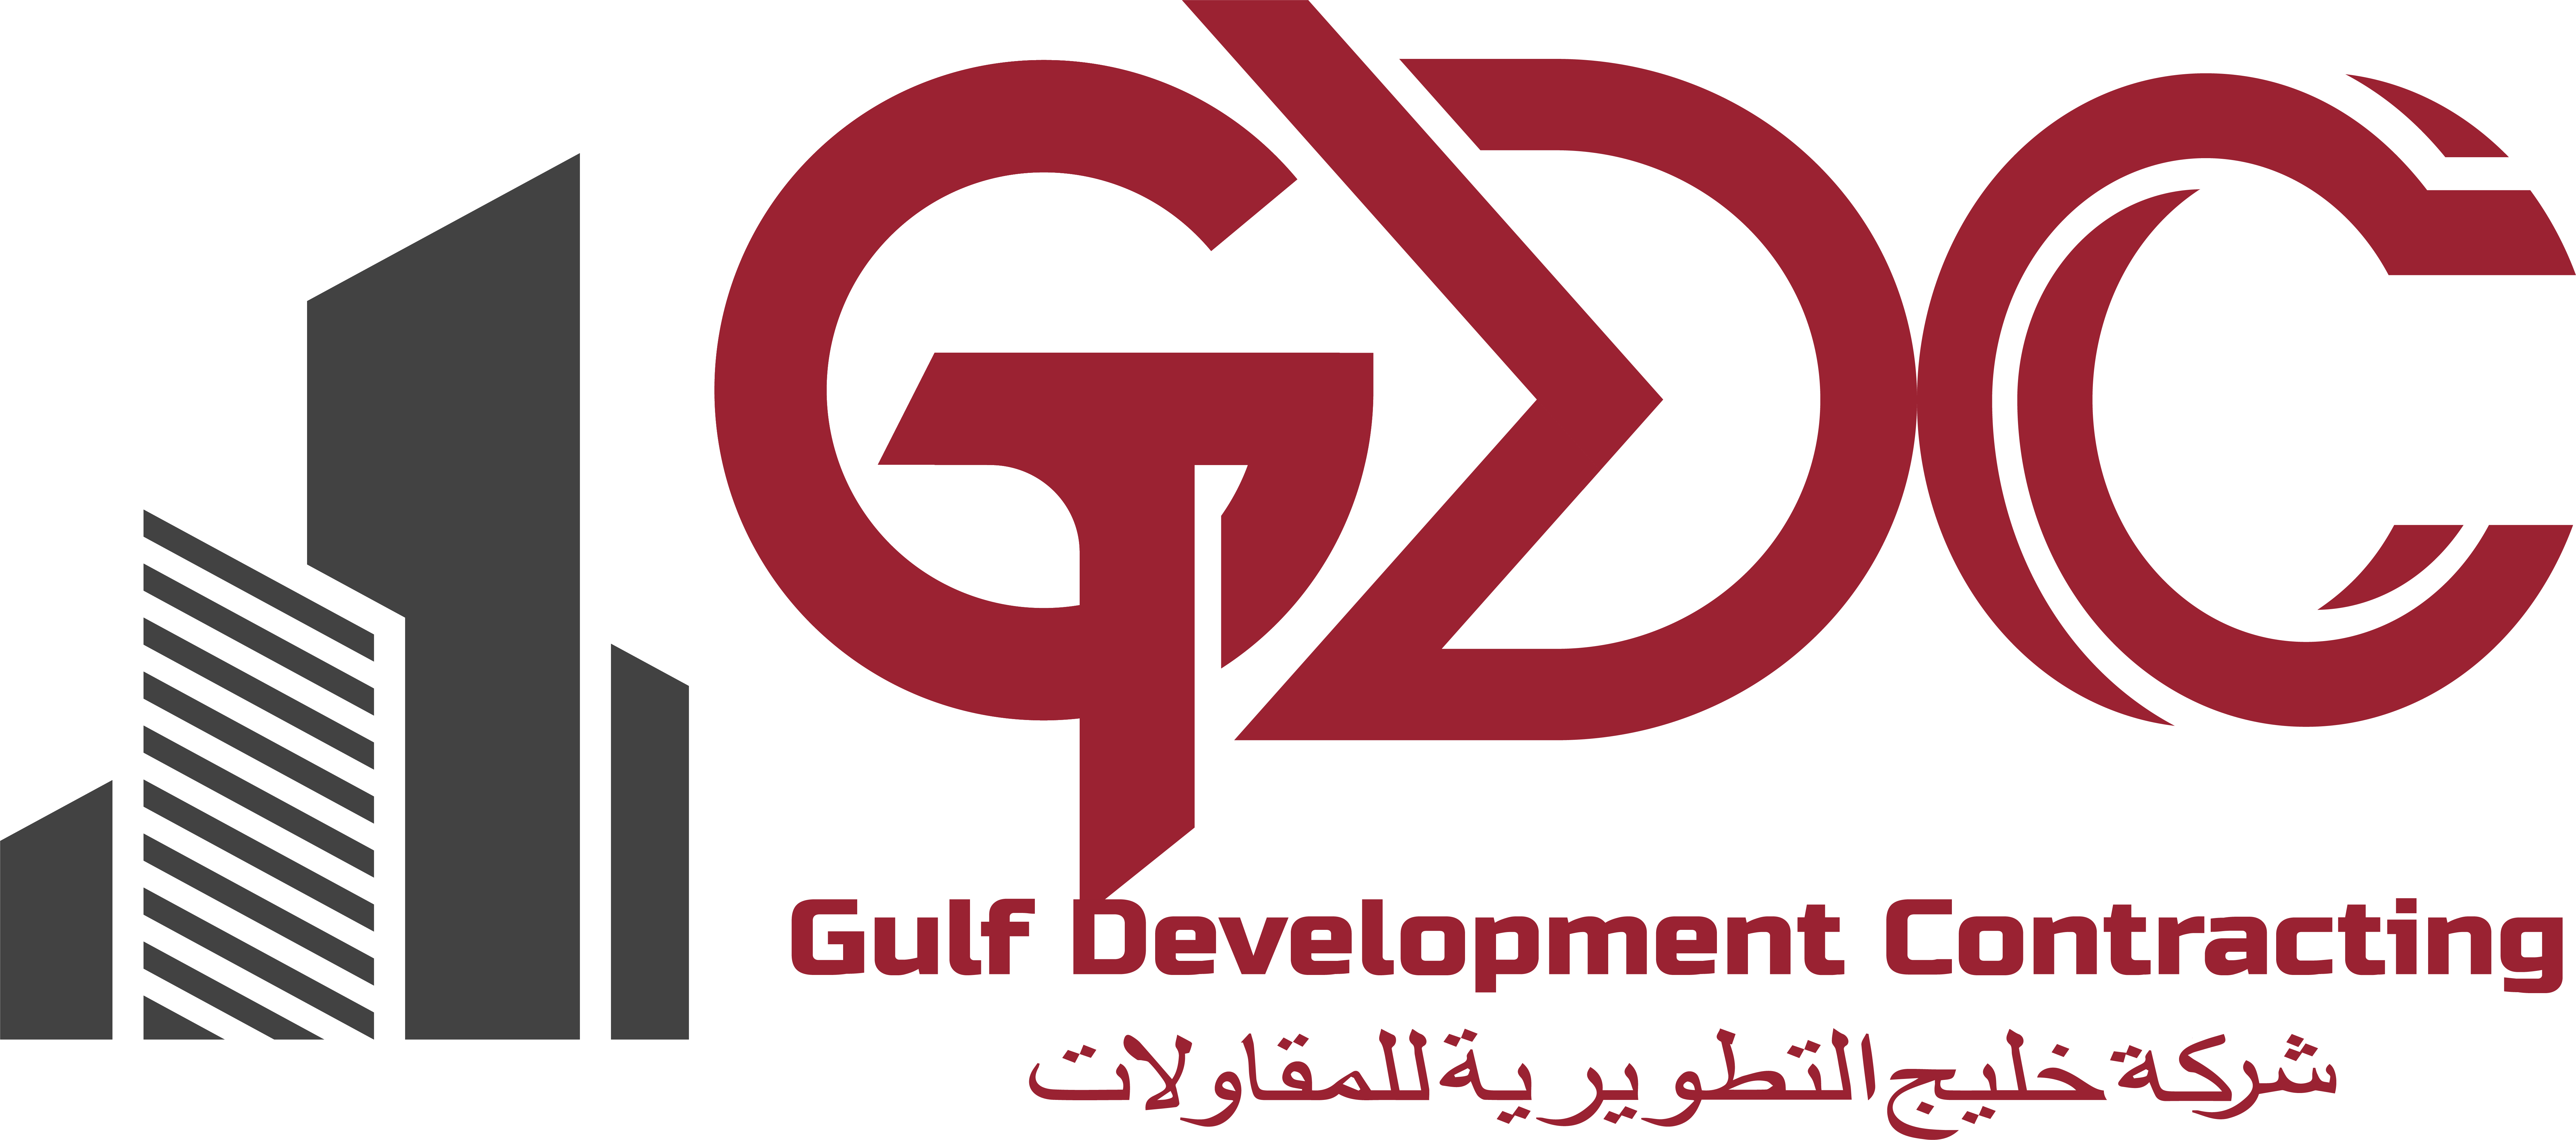 Gulf Development Contracting